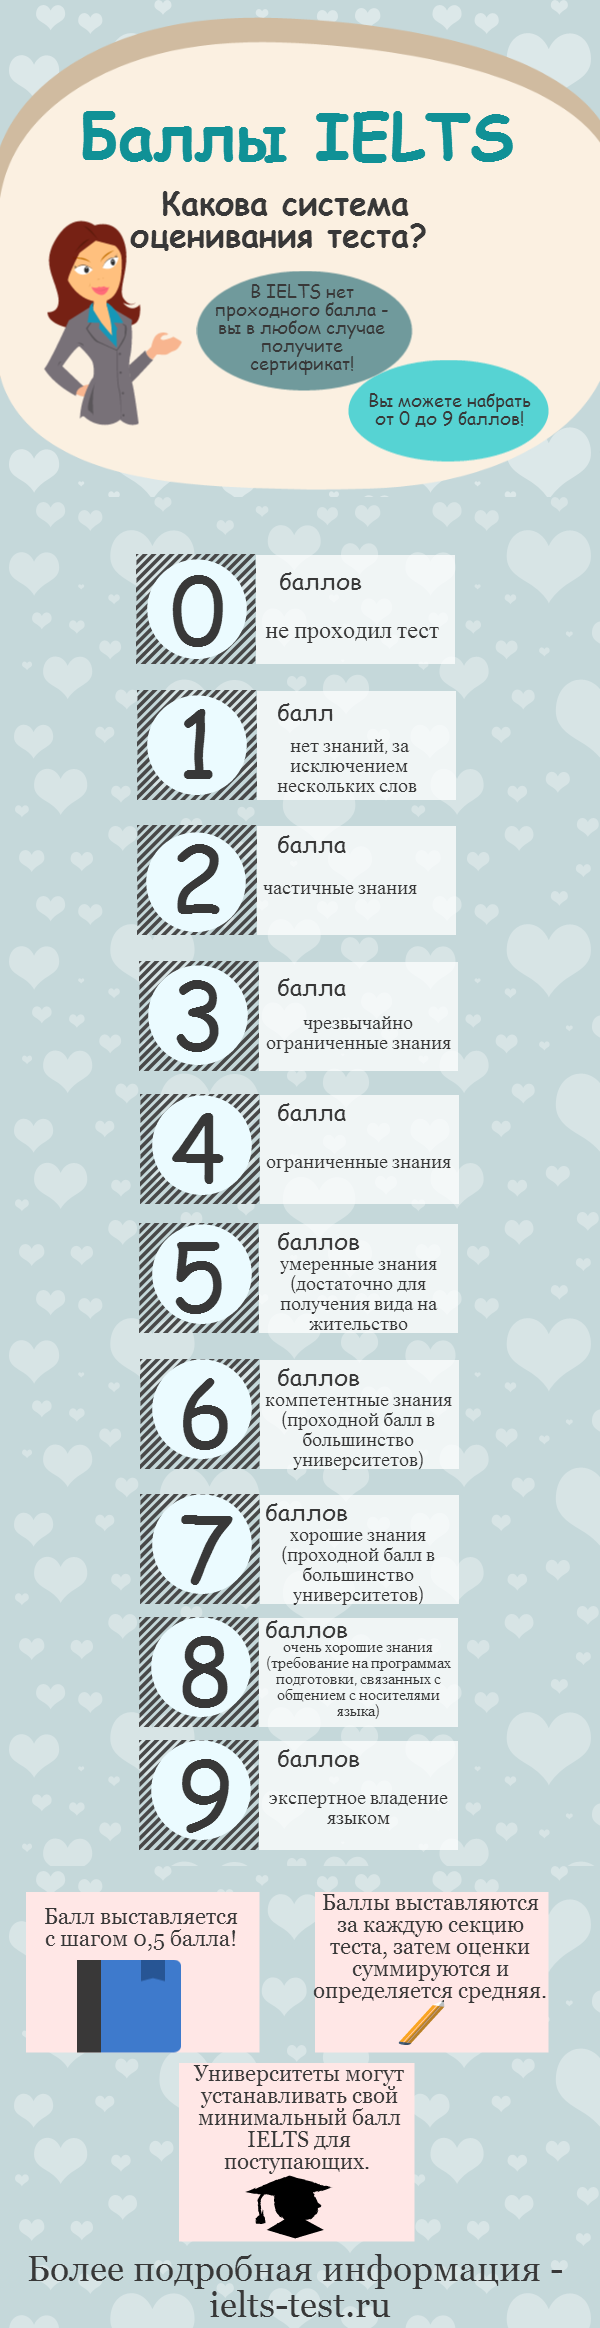 Баллы IELTS в инфографике от ielts-test.ru